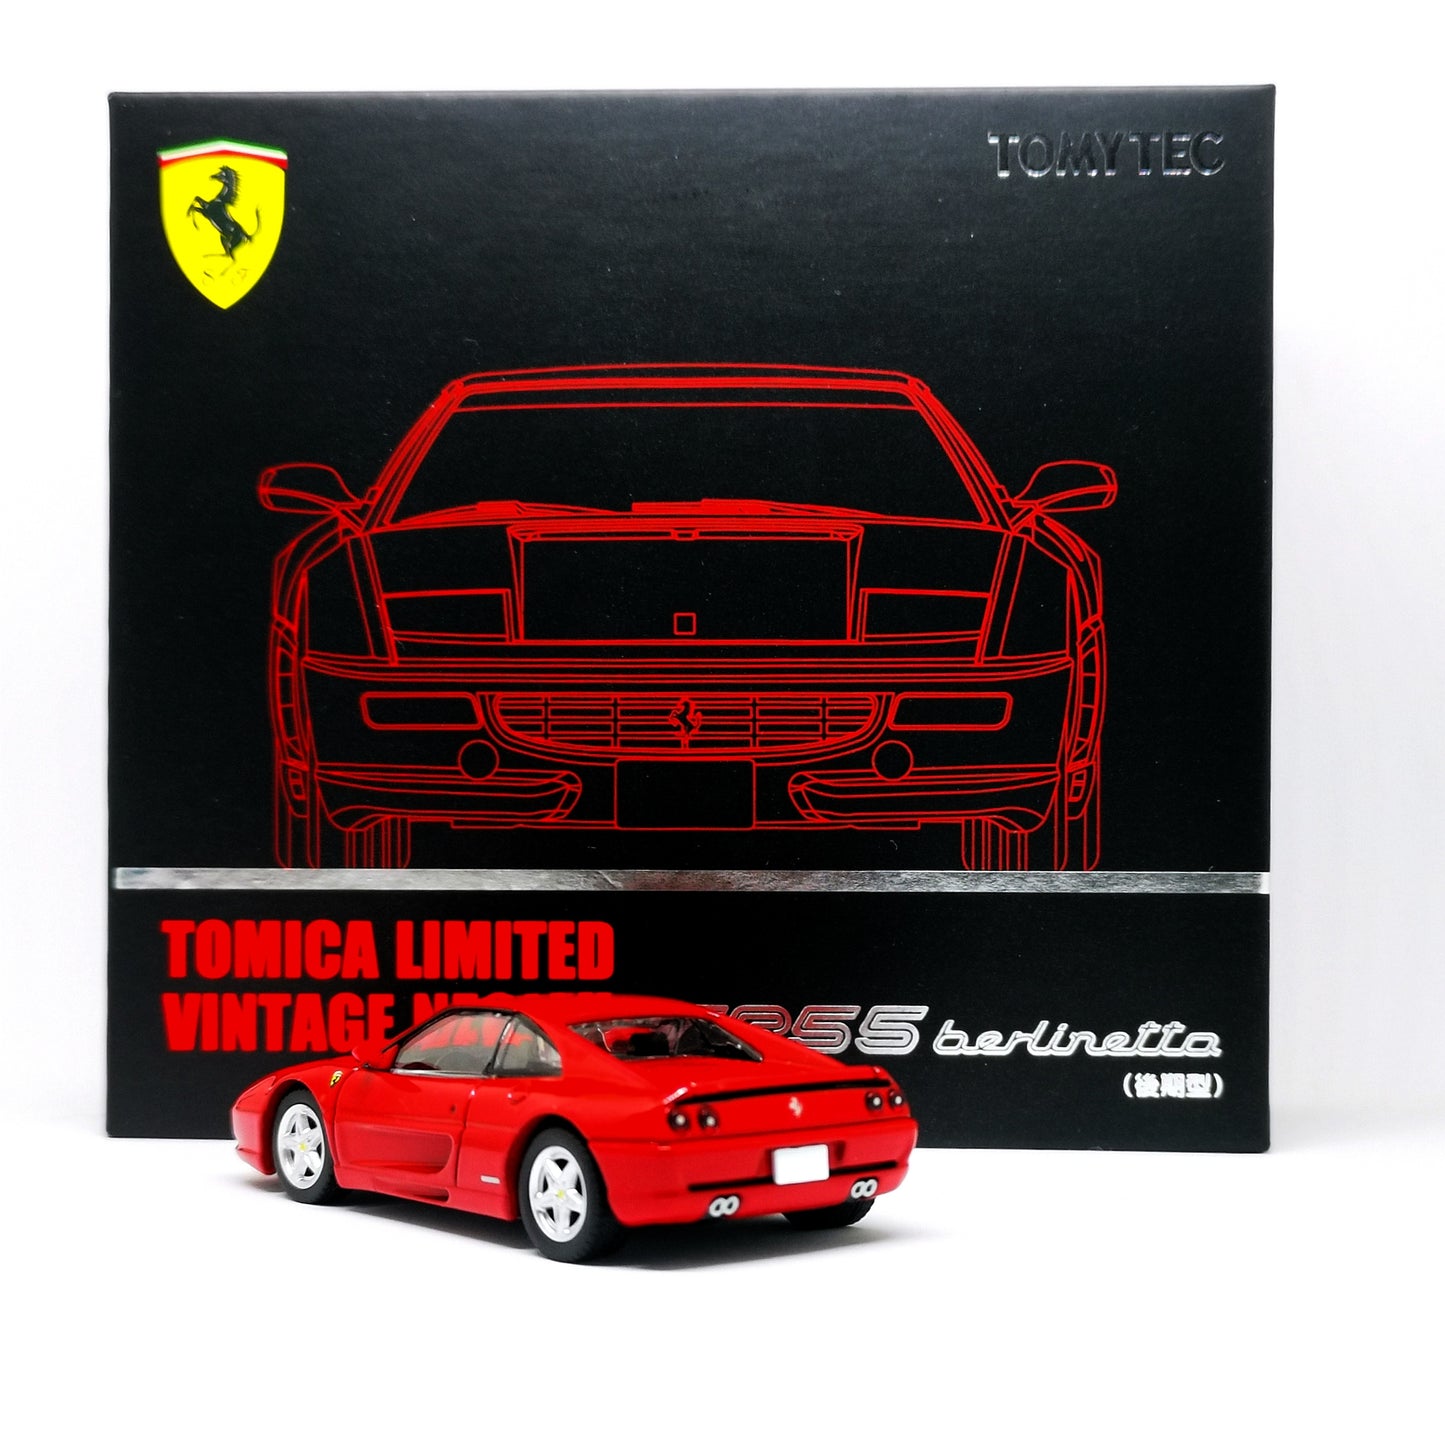 Tomica Limited Vintage Neo
Ferrari F355